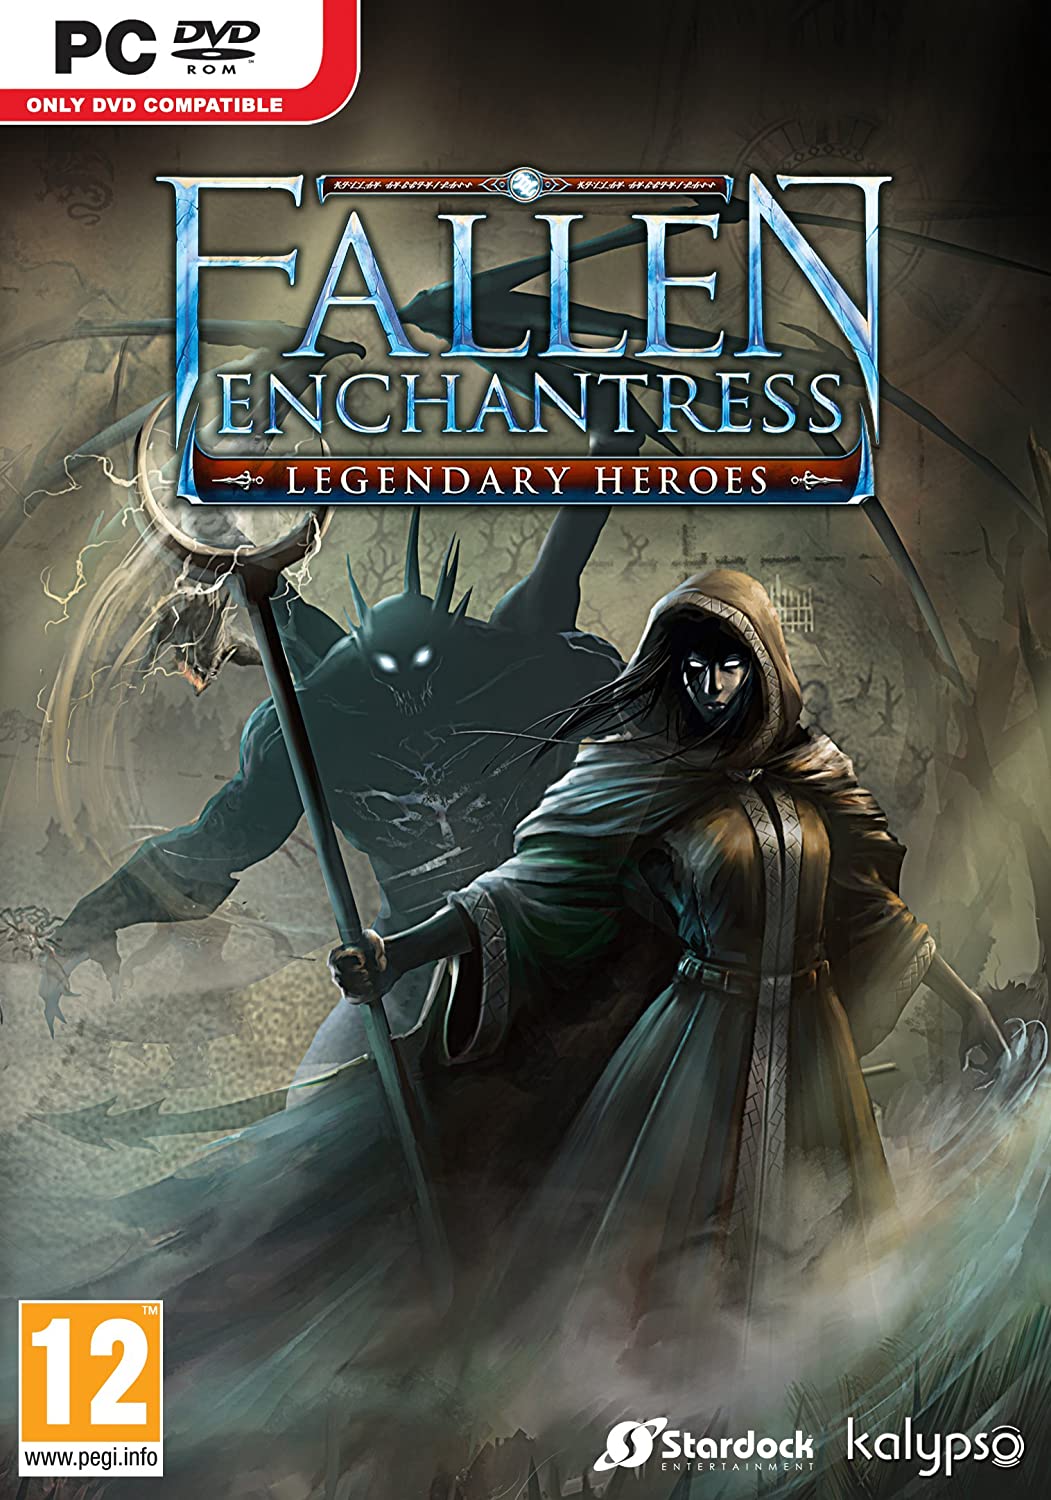 Fallen Enchantress: Legendary Heroes (PC-DVD)